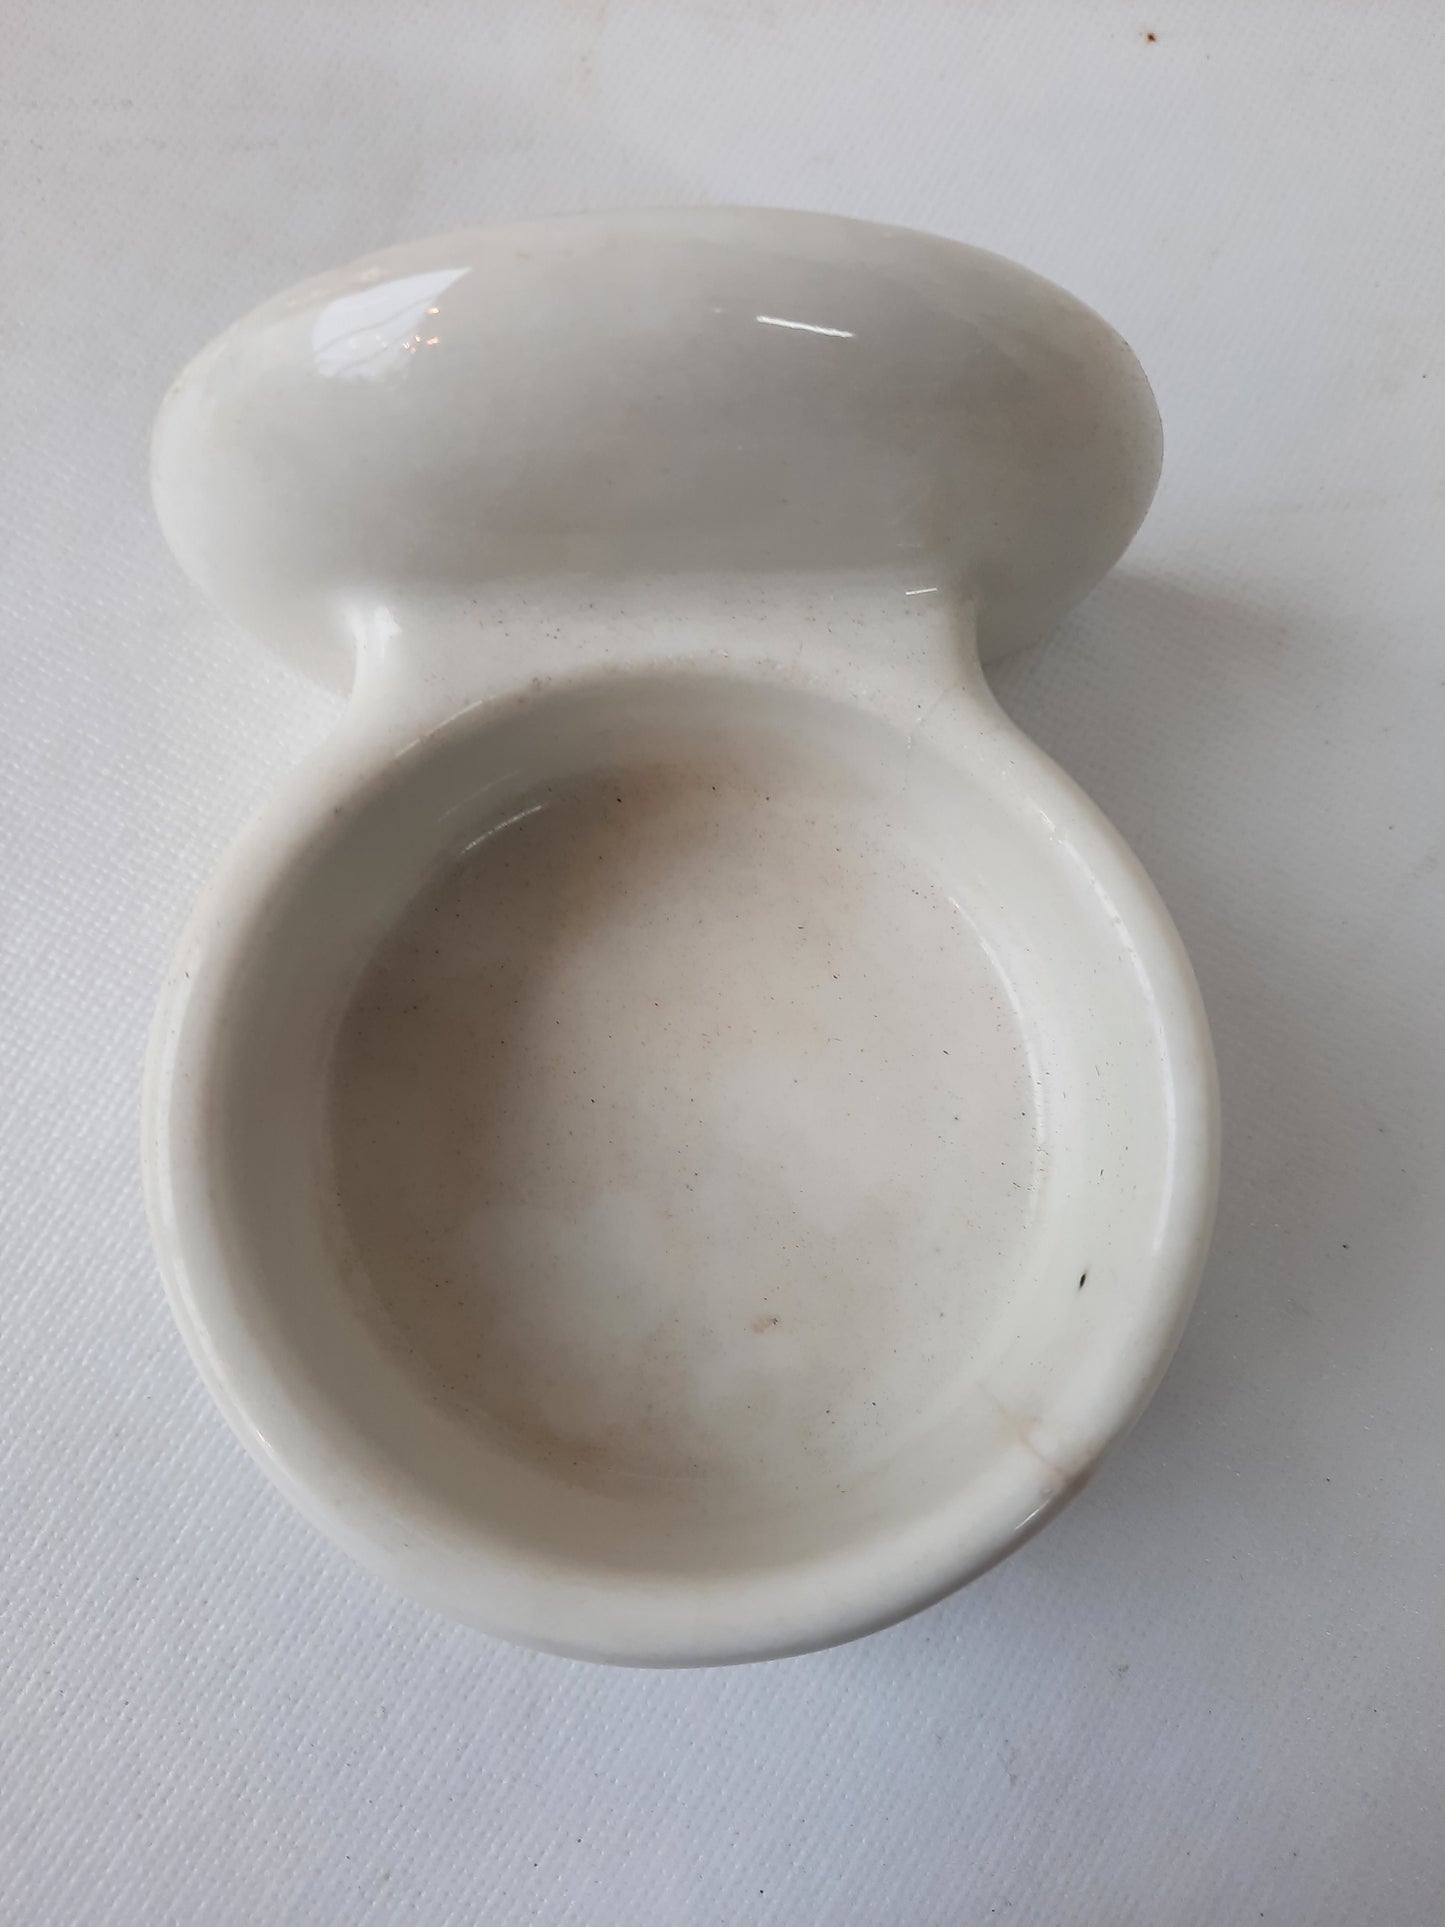 Vintage White Porcelain Bathroom Cup Holder or Soap Dish, Wall Mount Ceramic Cup Holder 121001